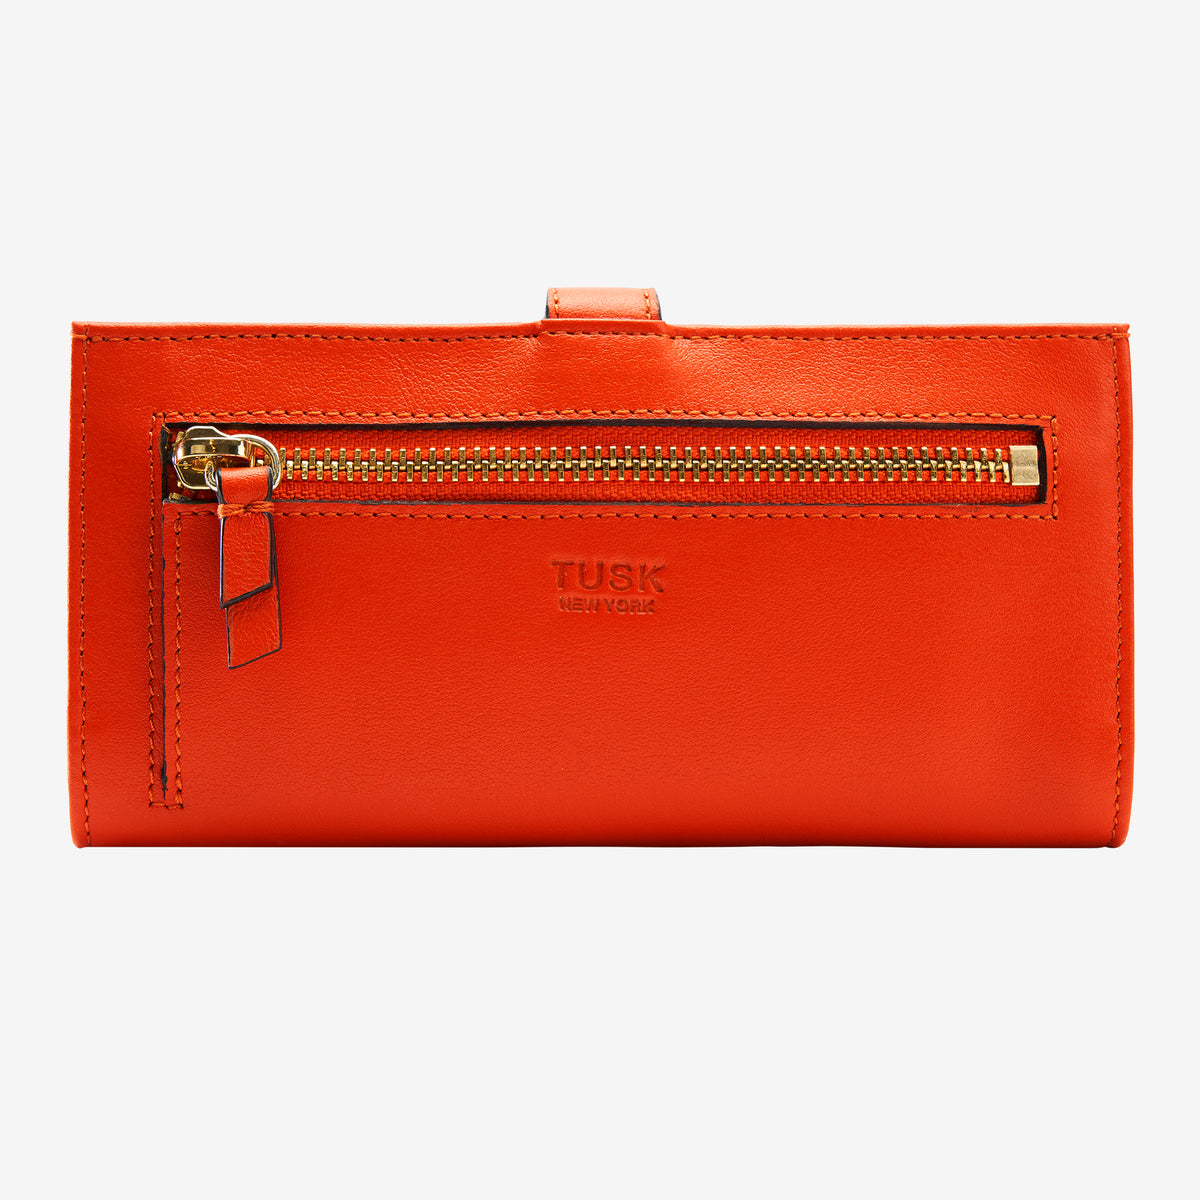     tusk-455-womens-joy-slim-leather-clutch-wallet-orange-back